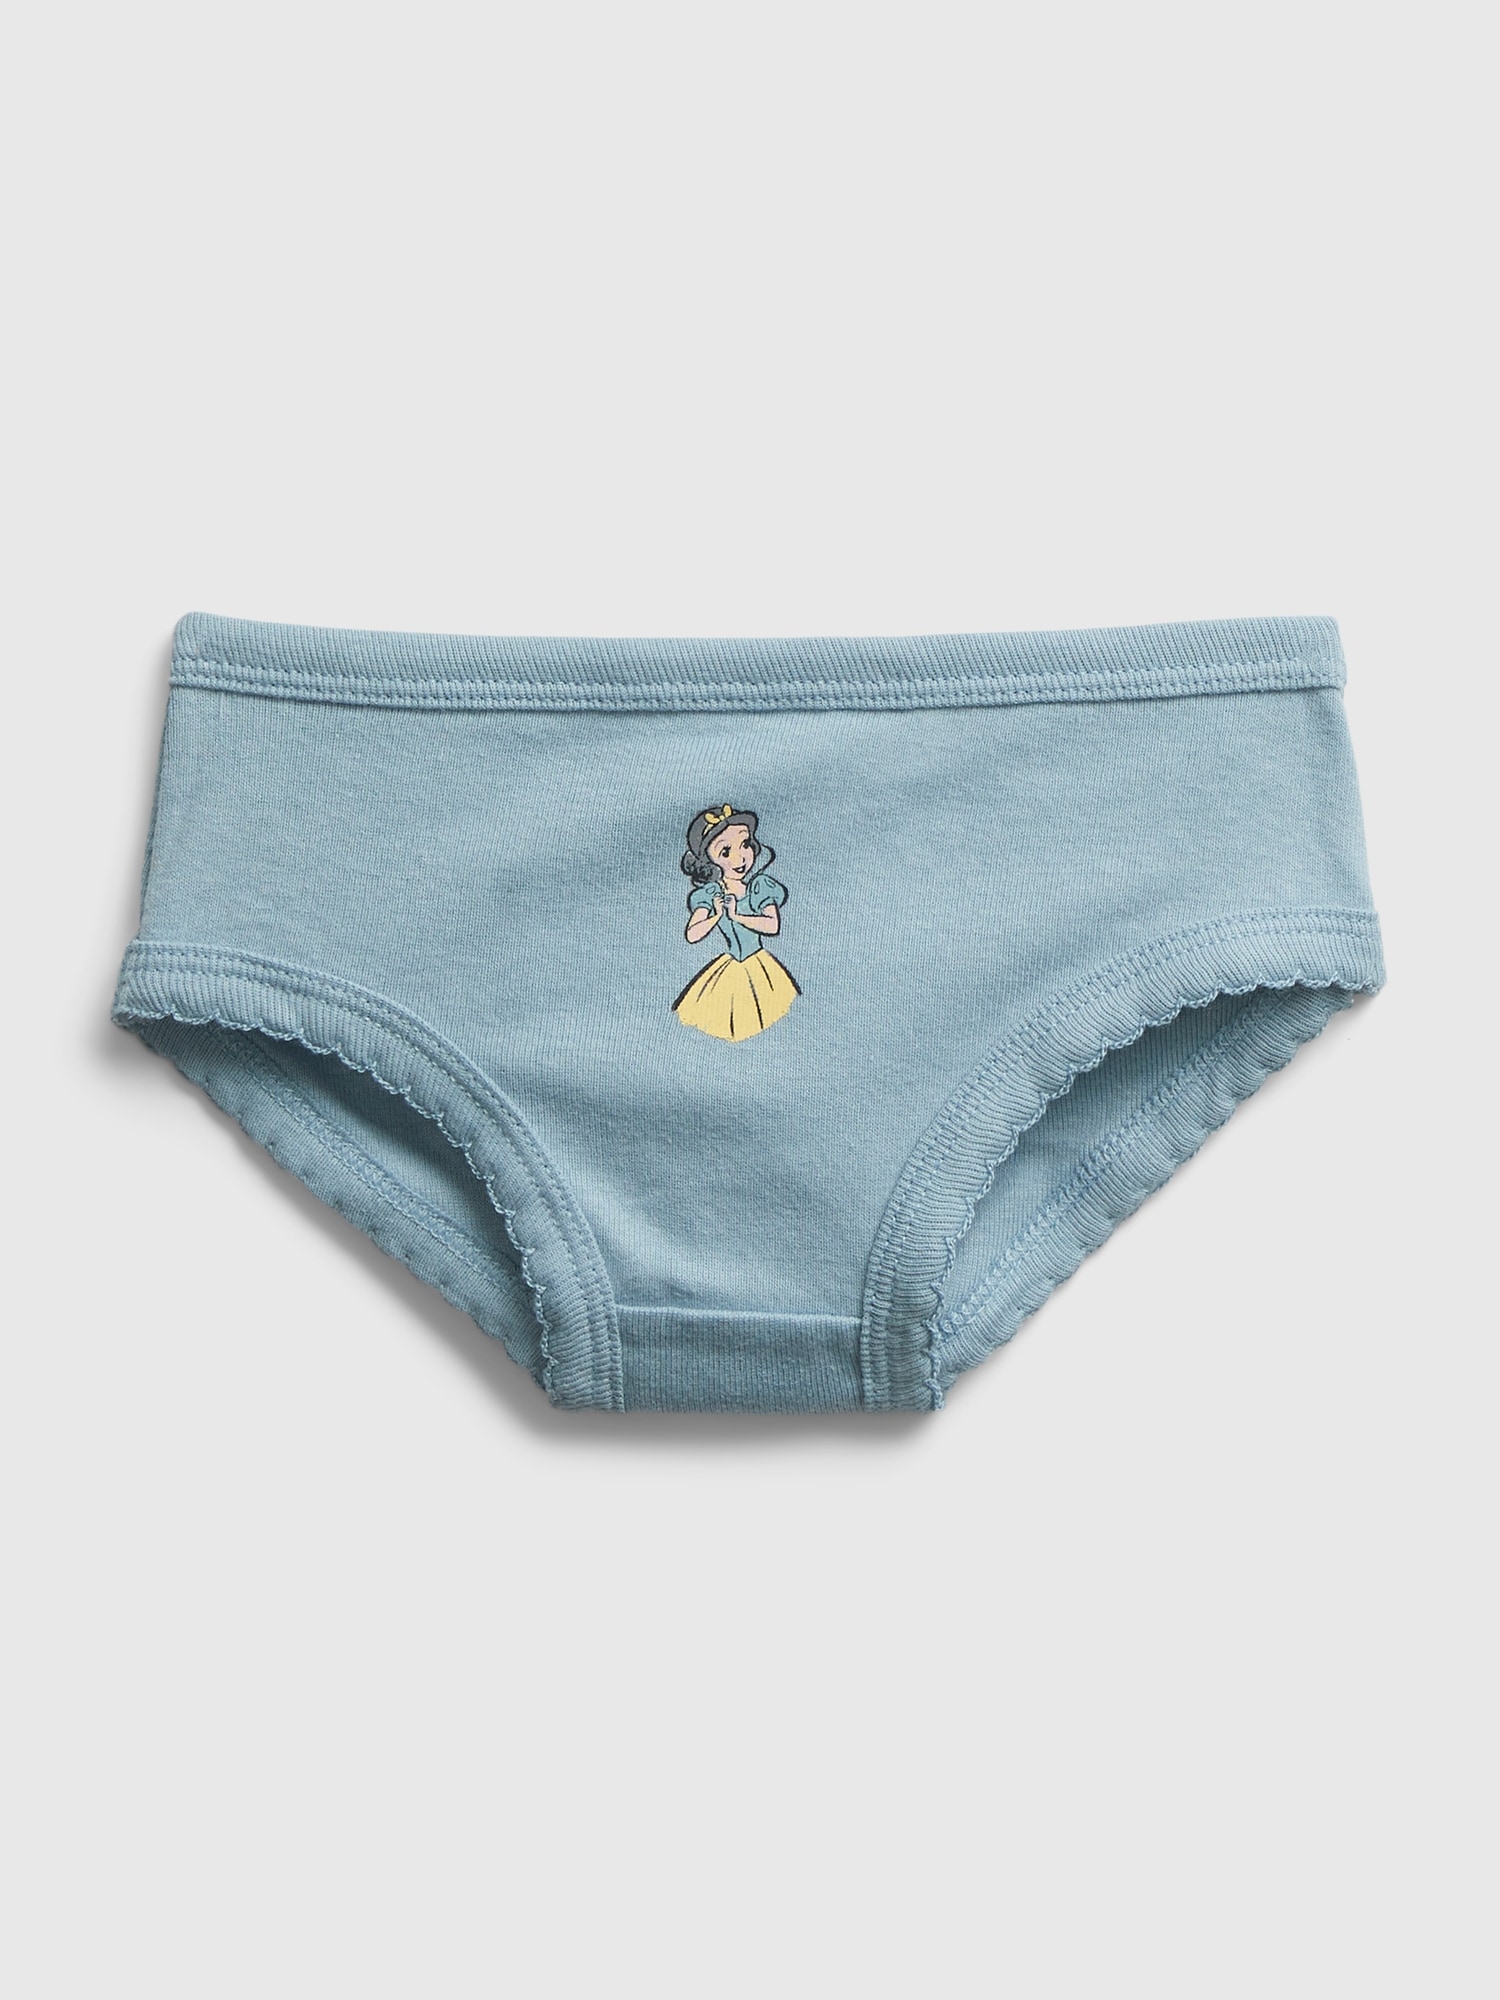 Disney Princess Knickers Pants Underwear Girls – Pack of 3 (Blue, 2-3  Years) : : Fashion